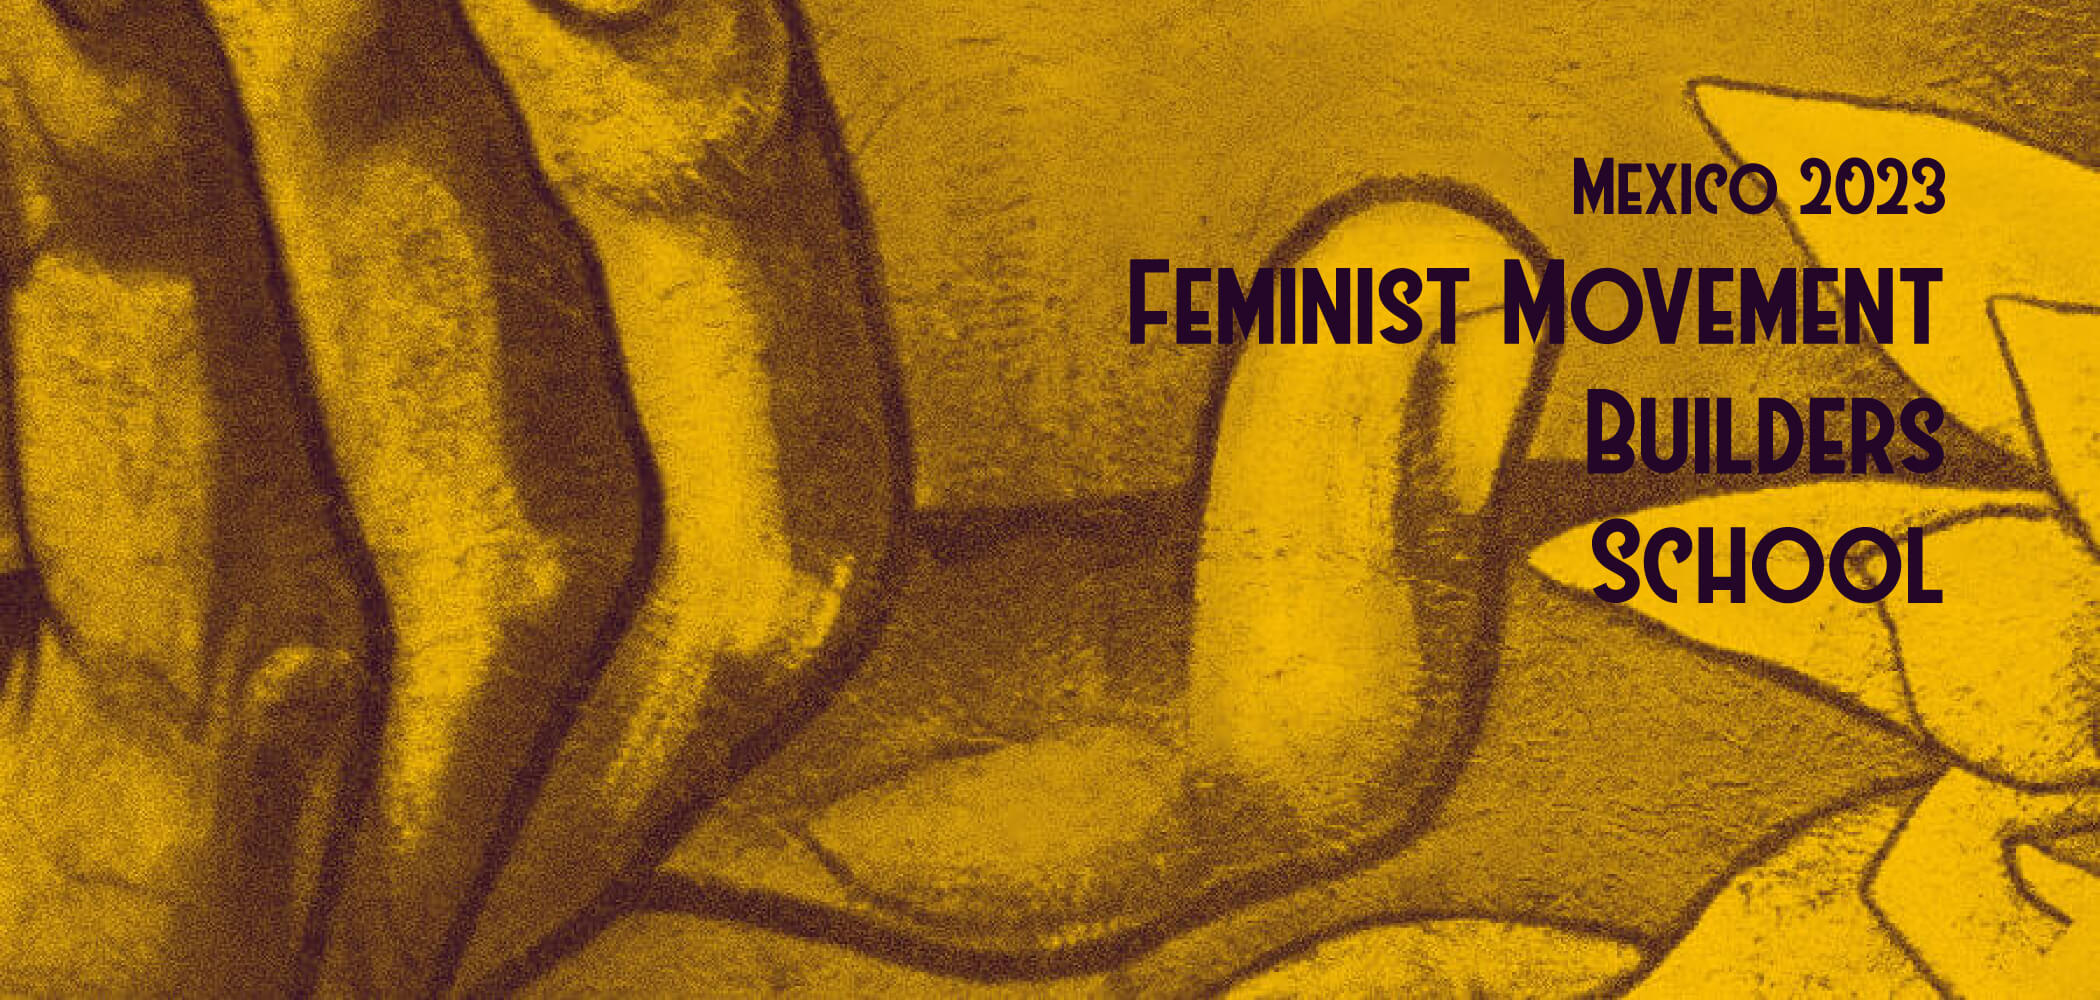 Feminist Movement Builders School